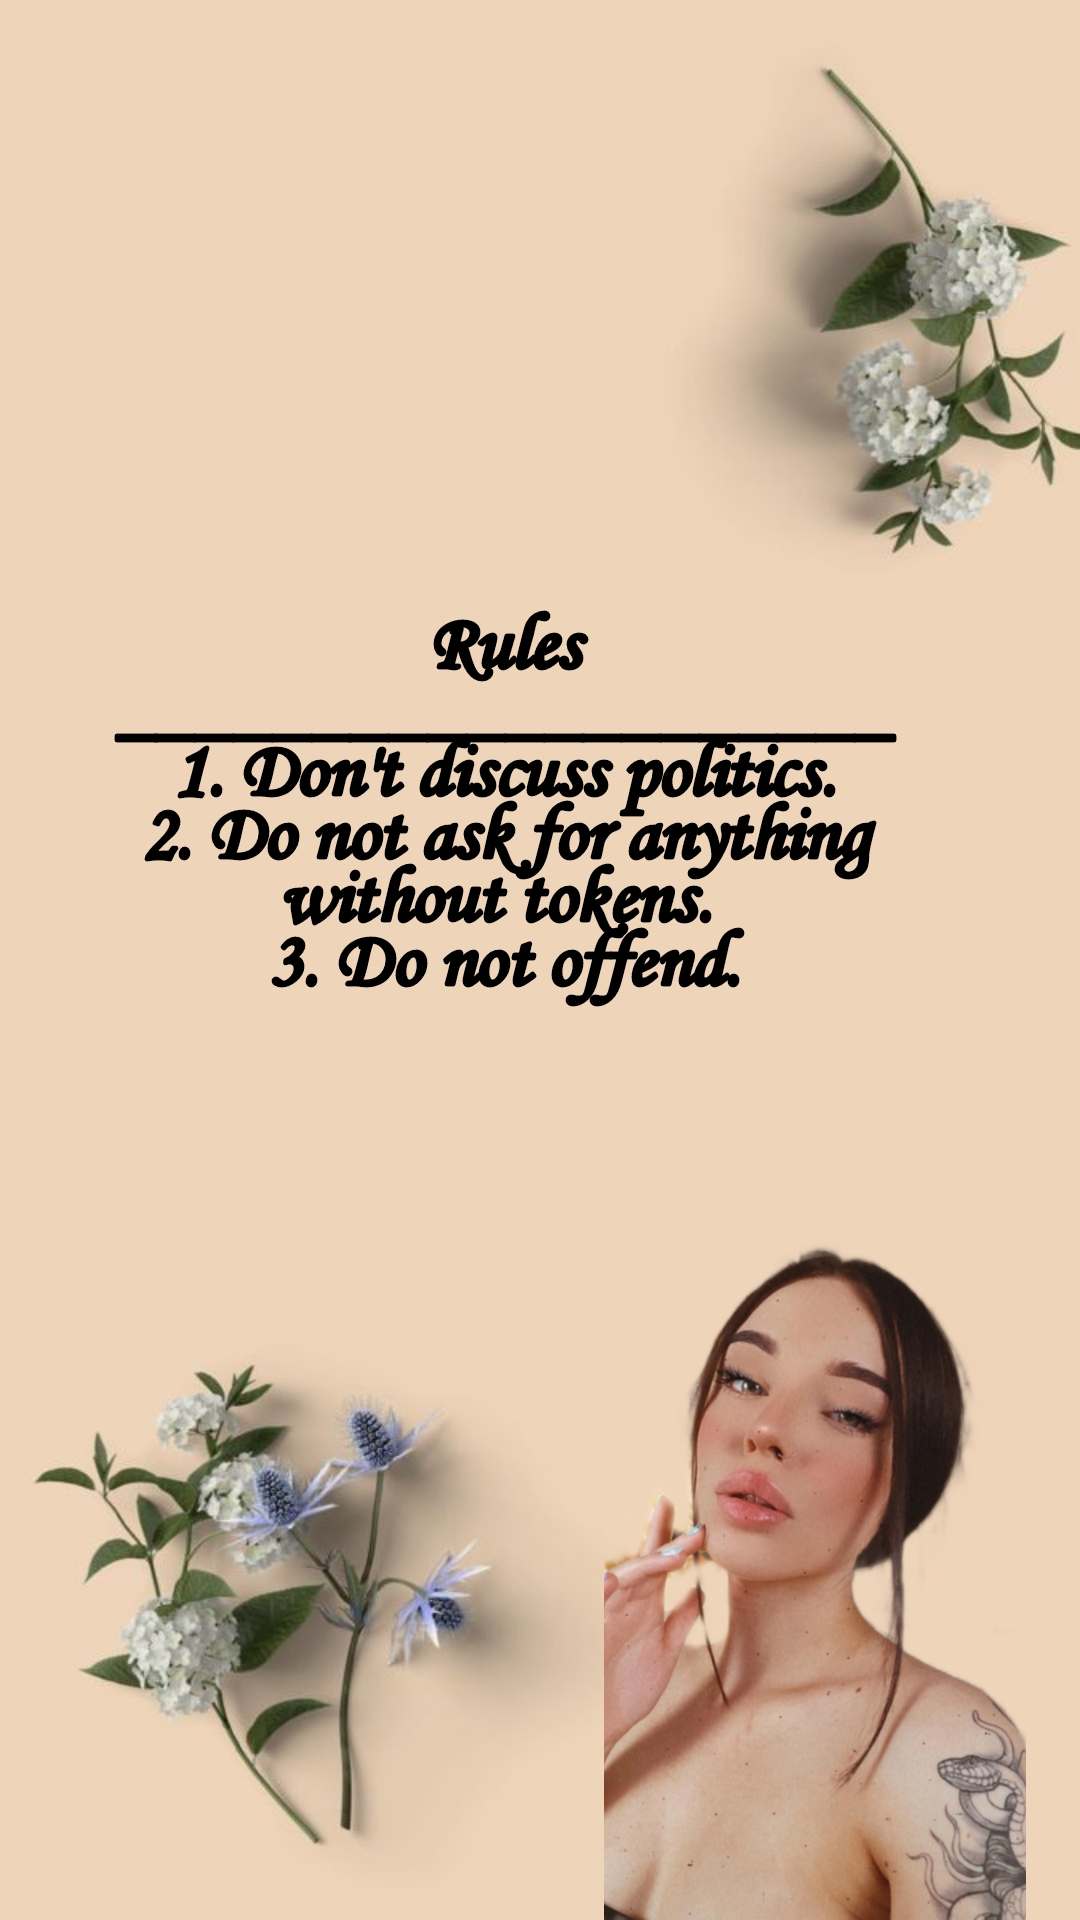 Krisssy1 Правила / Rules image: 1